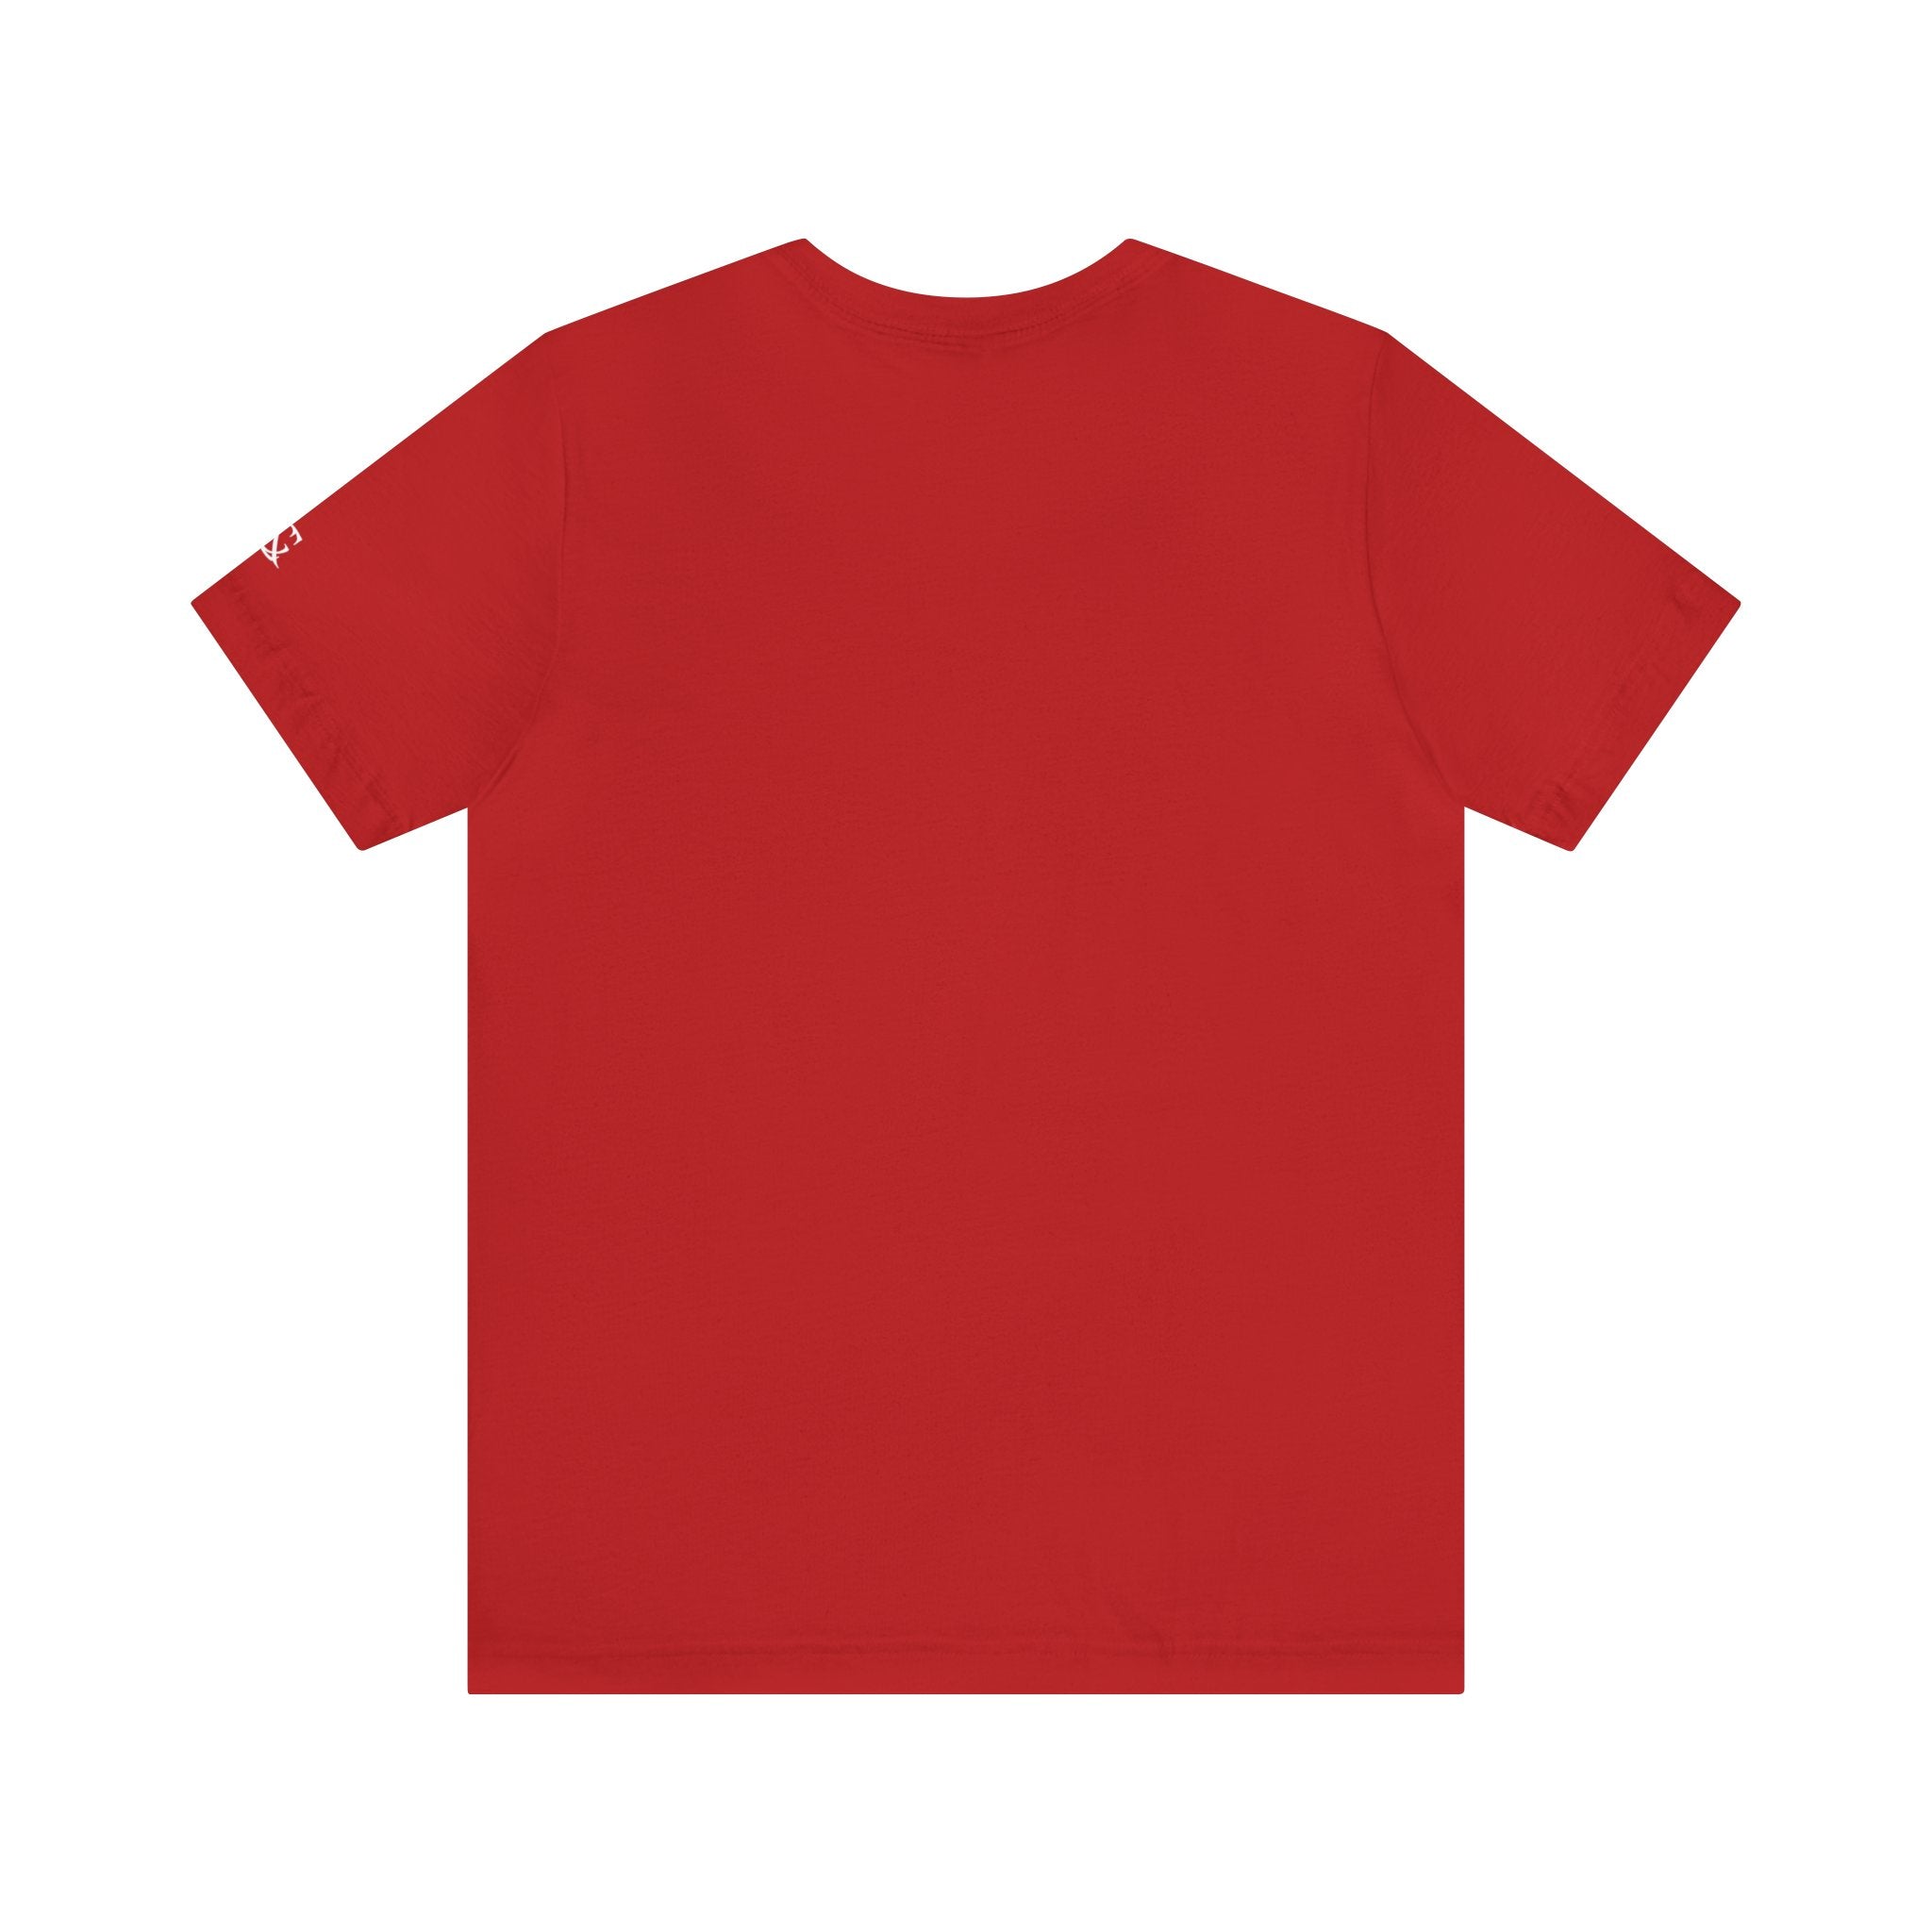 Customoi MMXXII Unisex Jersey Short Sleeve T-Shirt